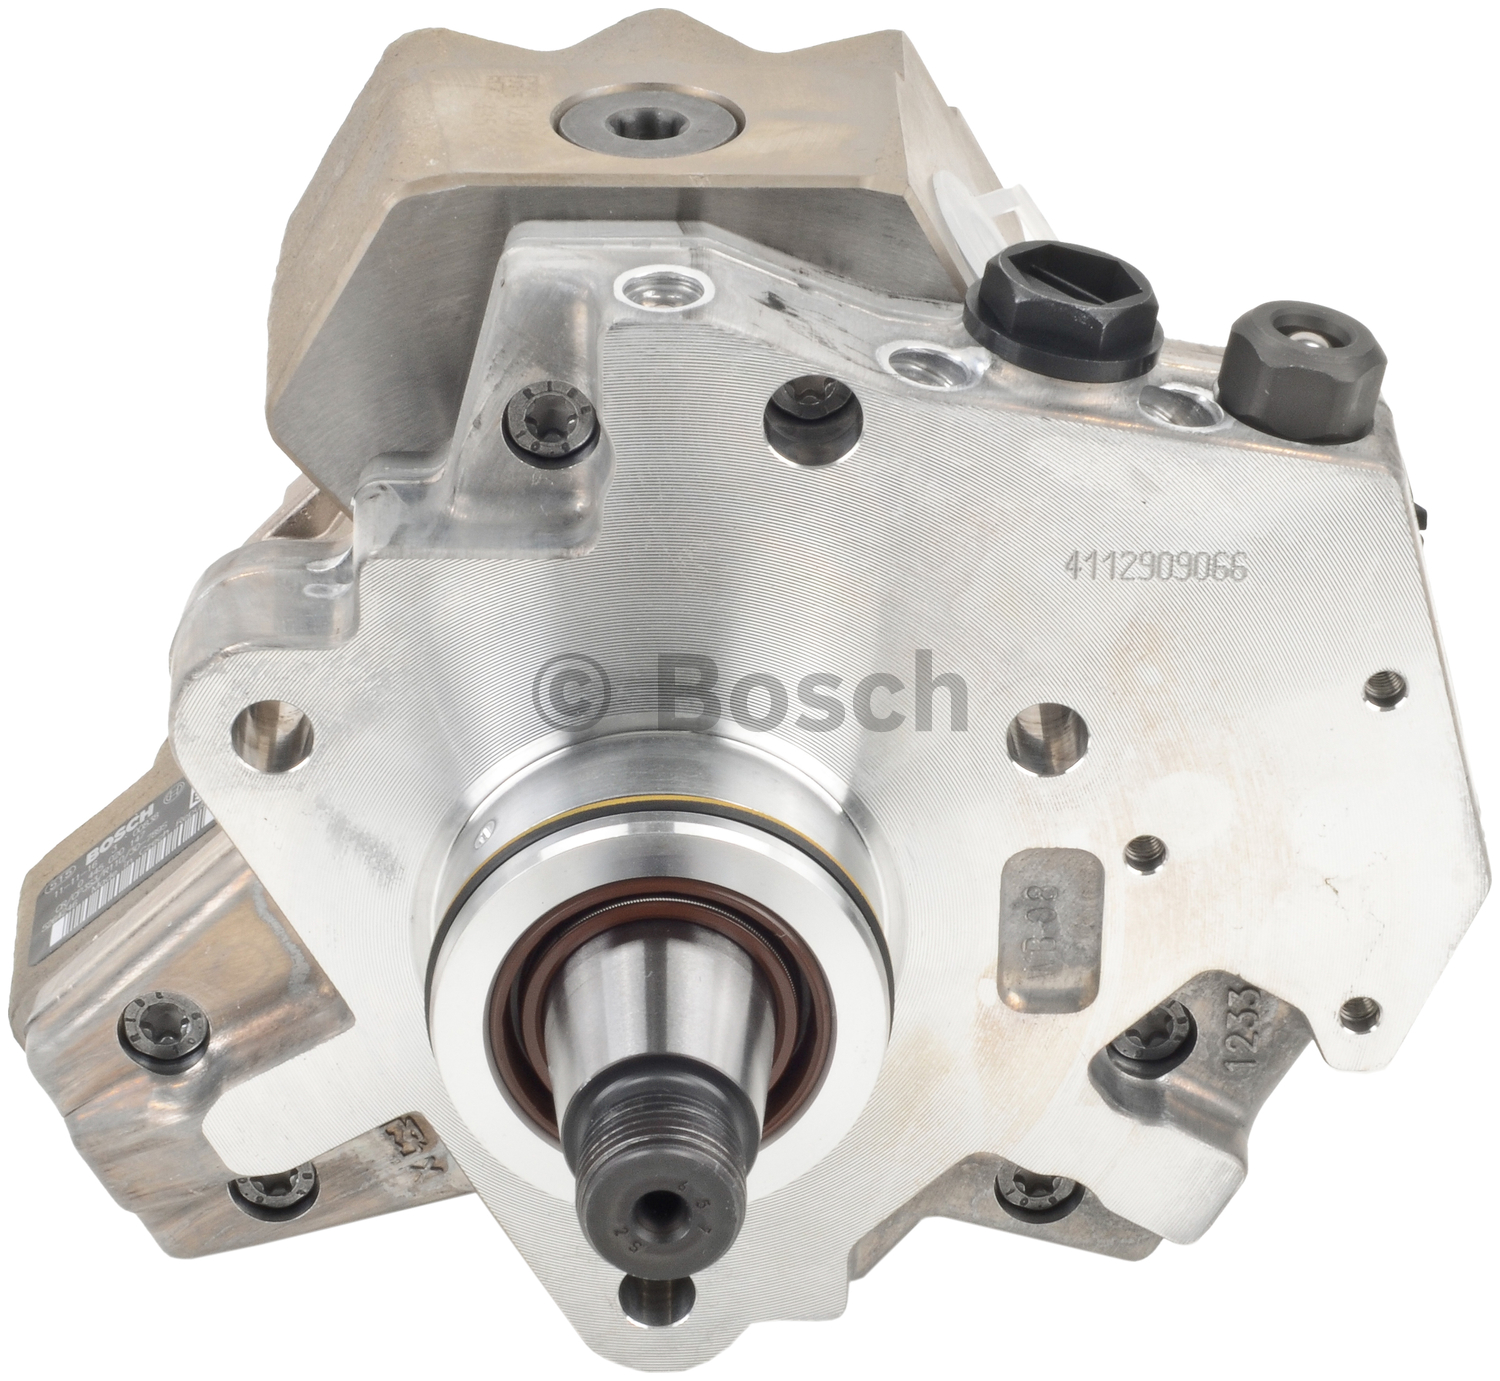 0-986-437-304_Bosch Fuel Injection Pump